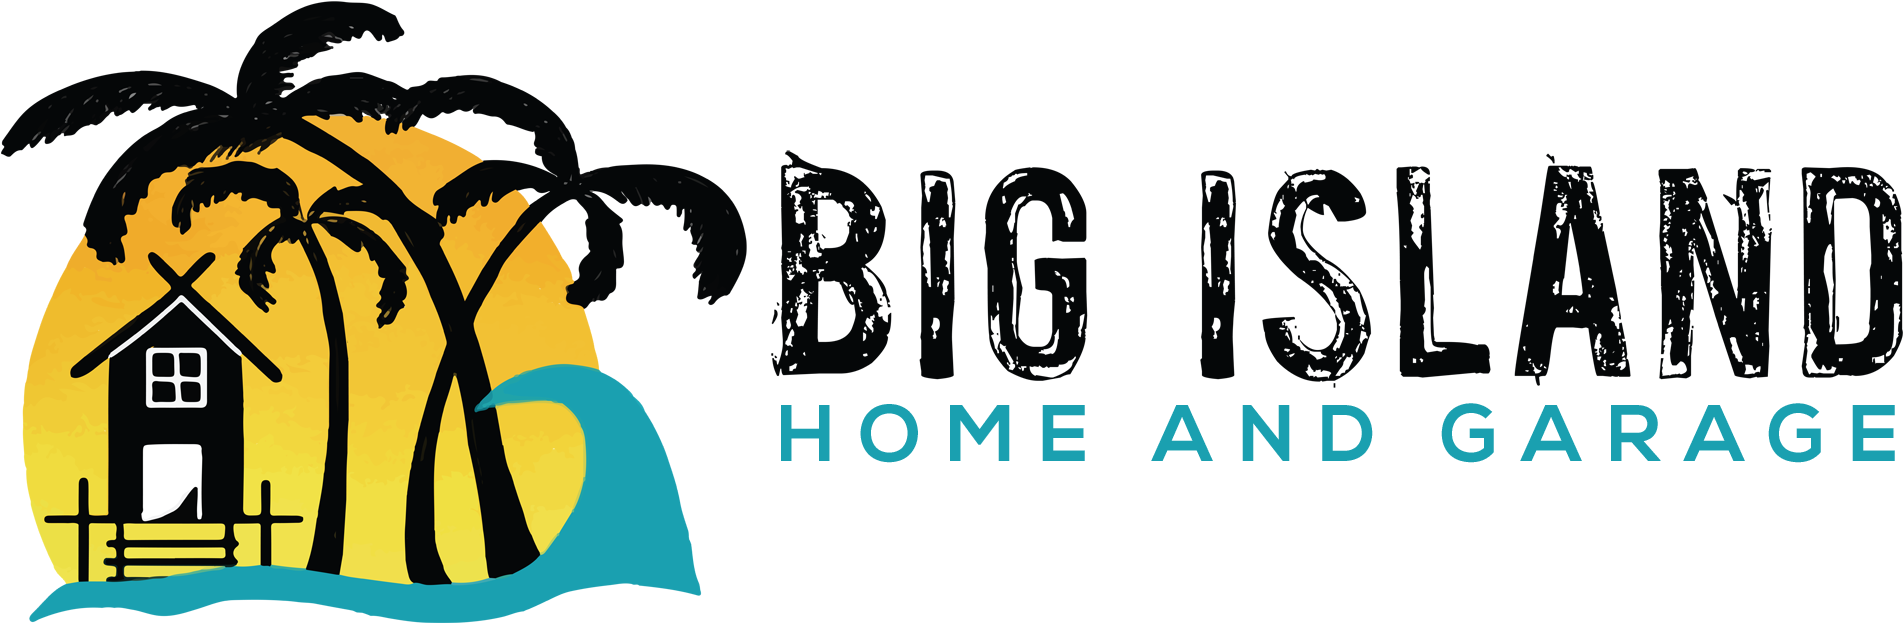 Big Island Home & Garage - Wwe One Night Stand (1944x639)